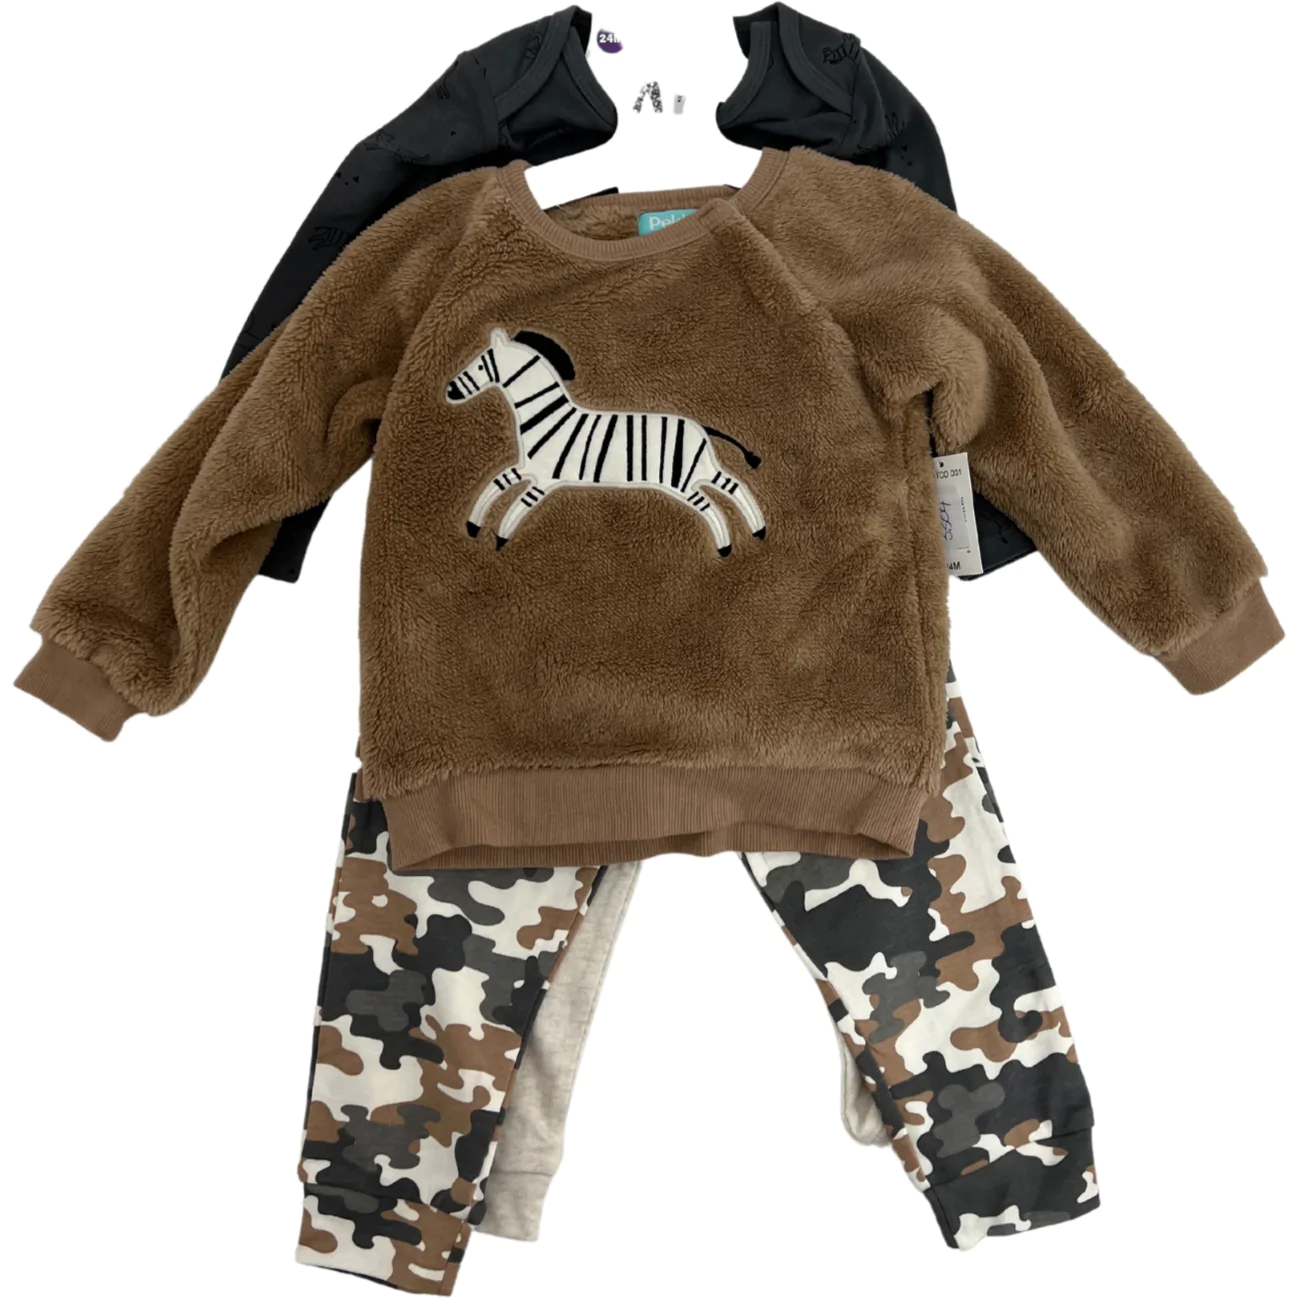 Pekkle Children's Clothing Set / 4 Piece Set / Zebra Theme / Size 24M